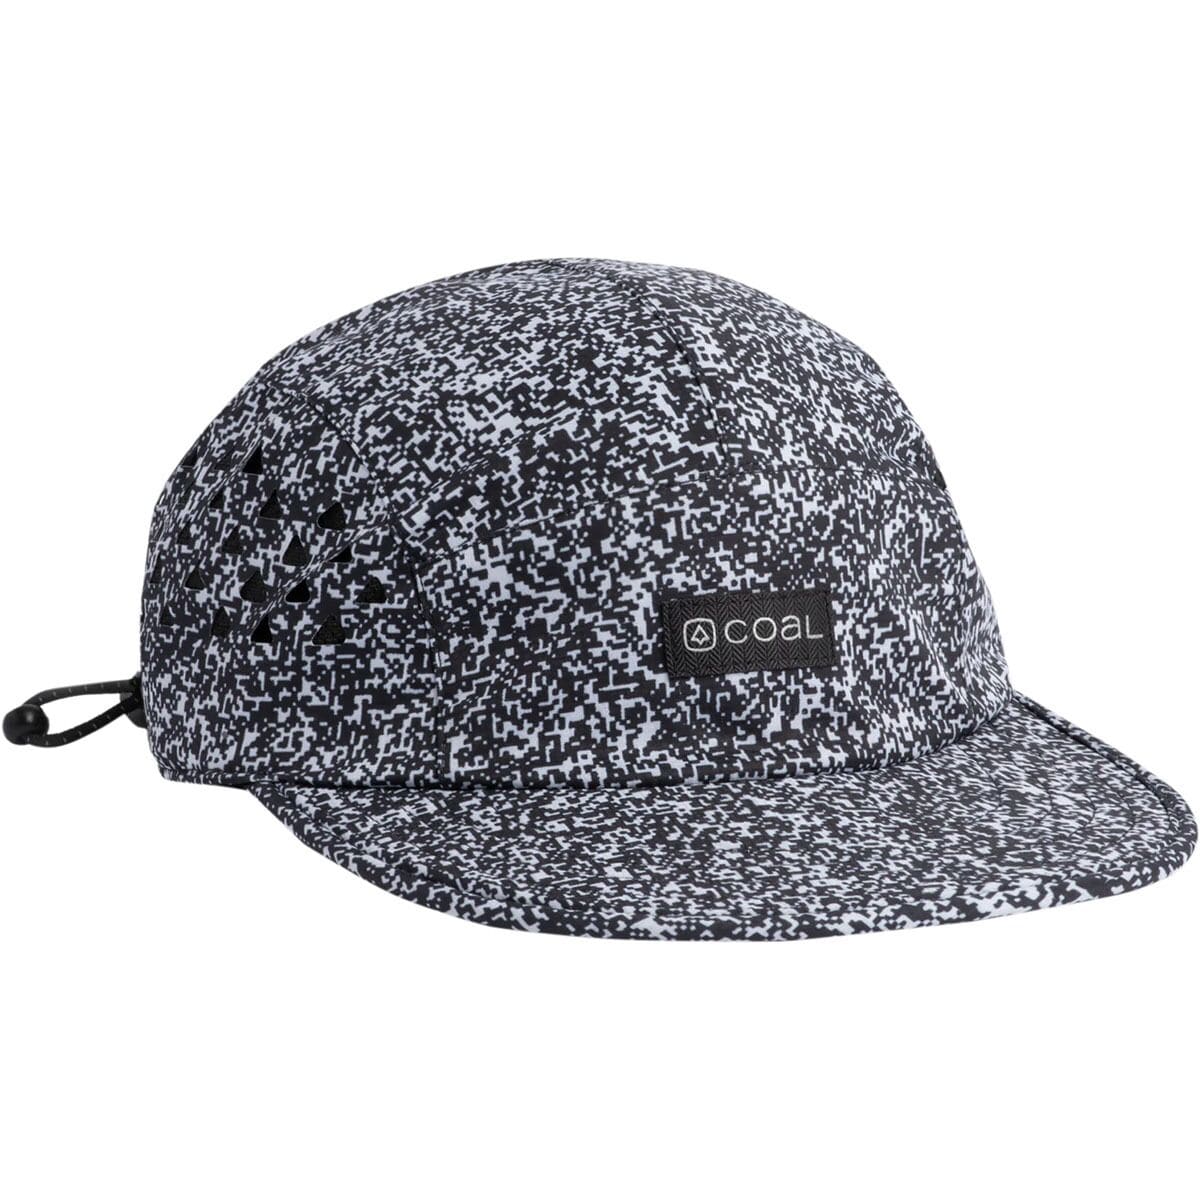 аналоговая шляпа coal headwear цвет fuchsia Пятипанельная шляпа provo Coal Headwear, цвет static